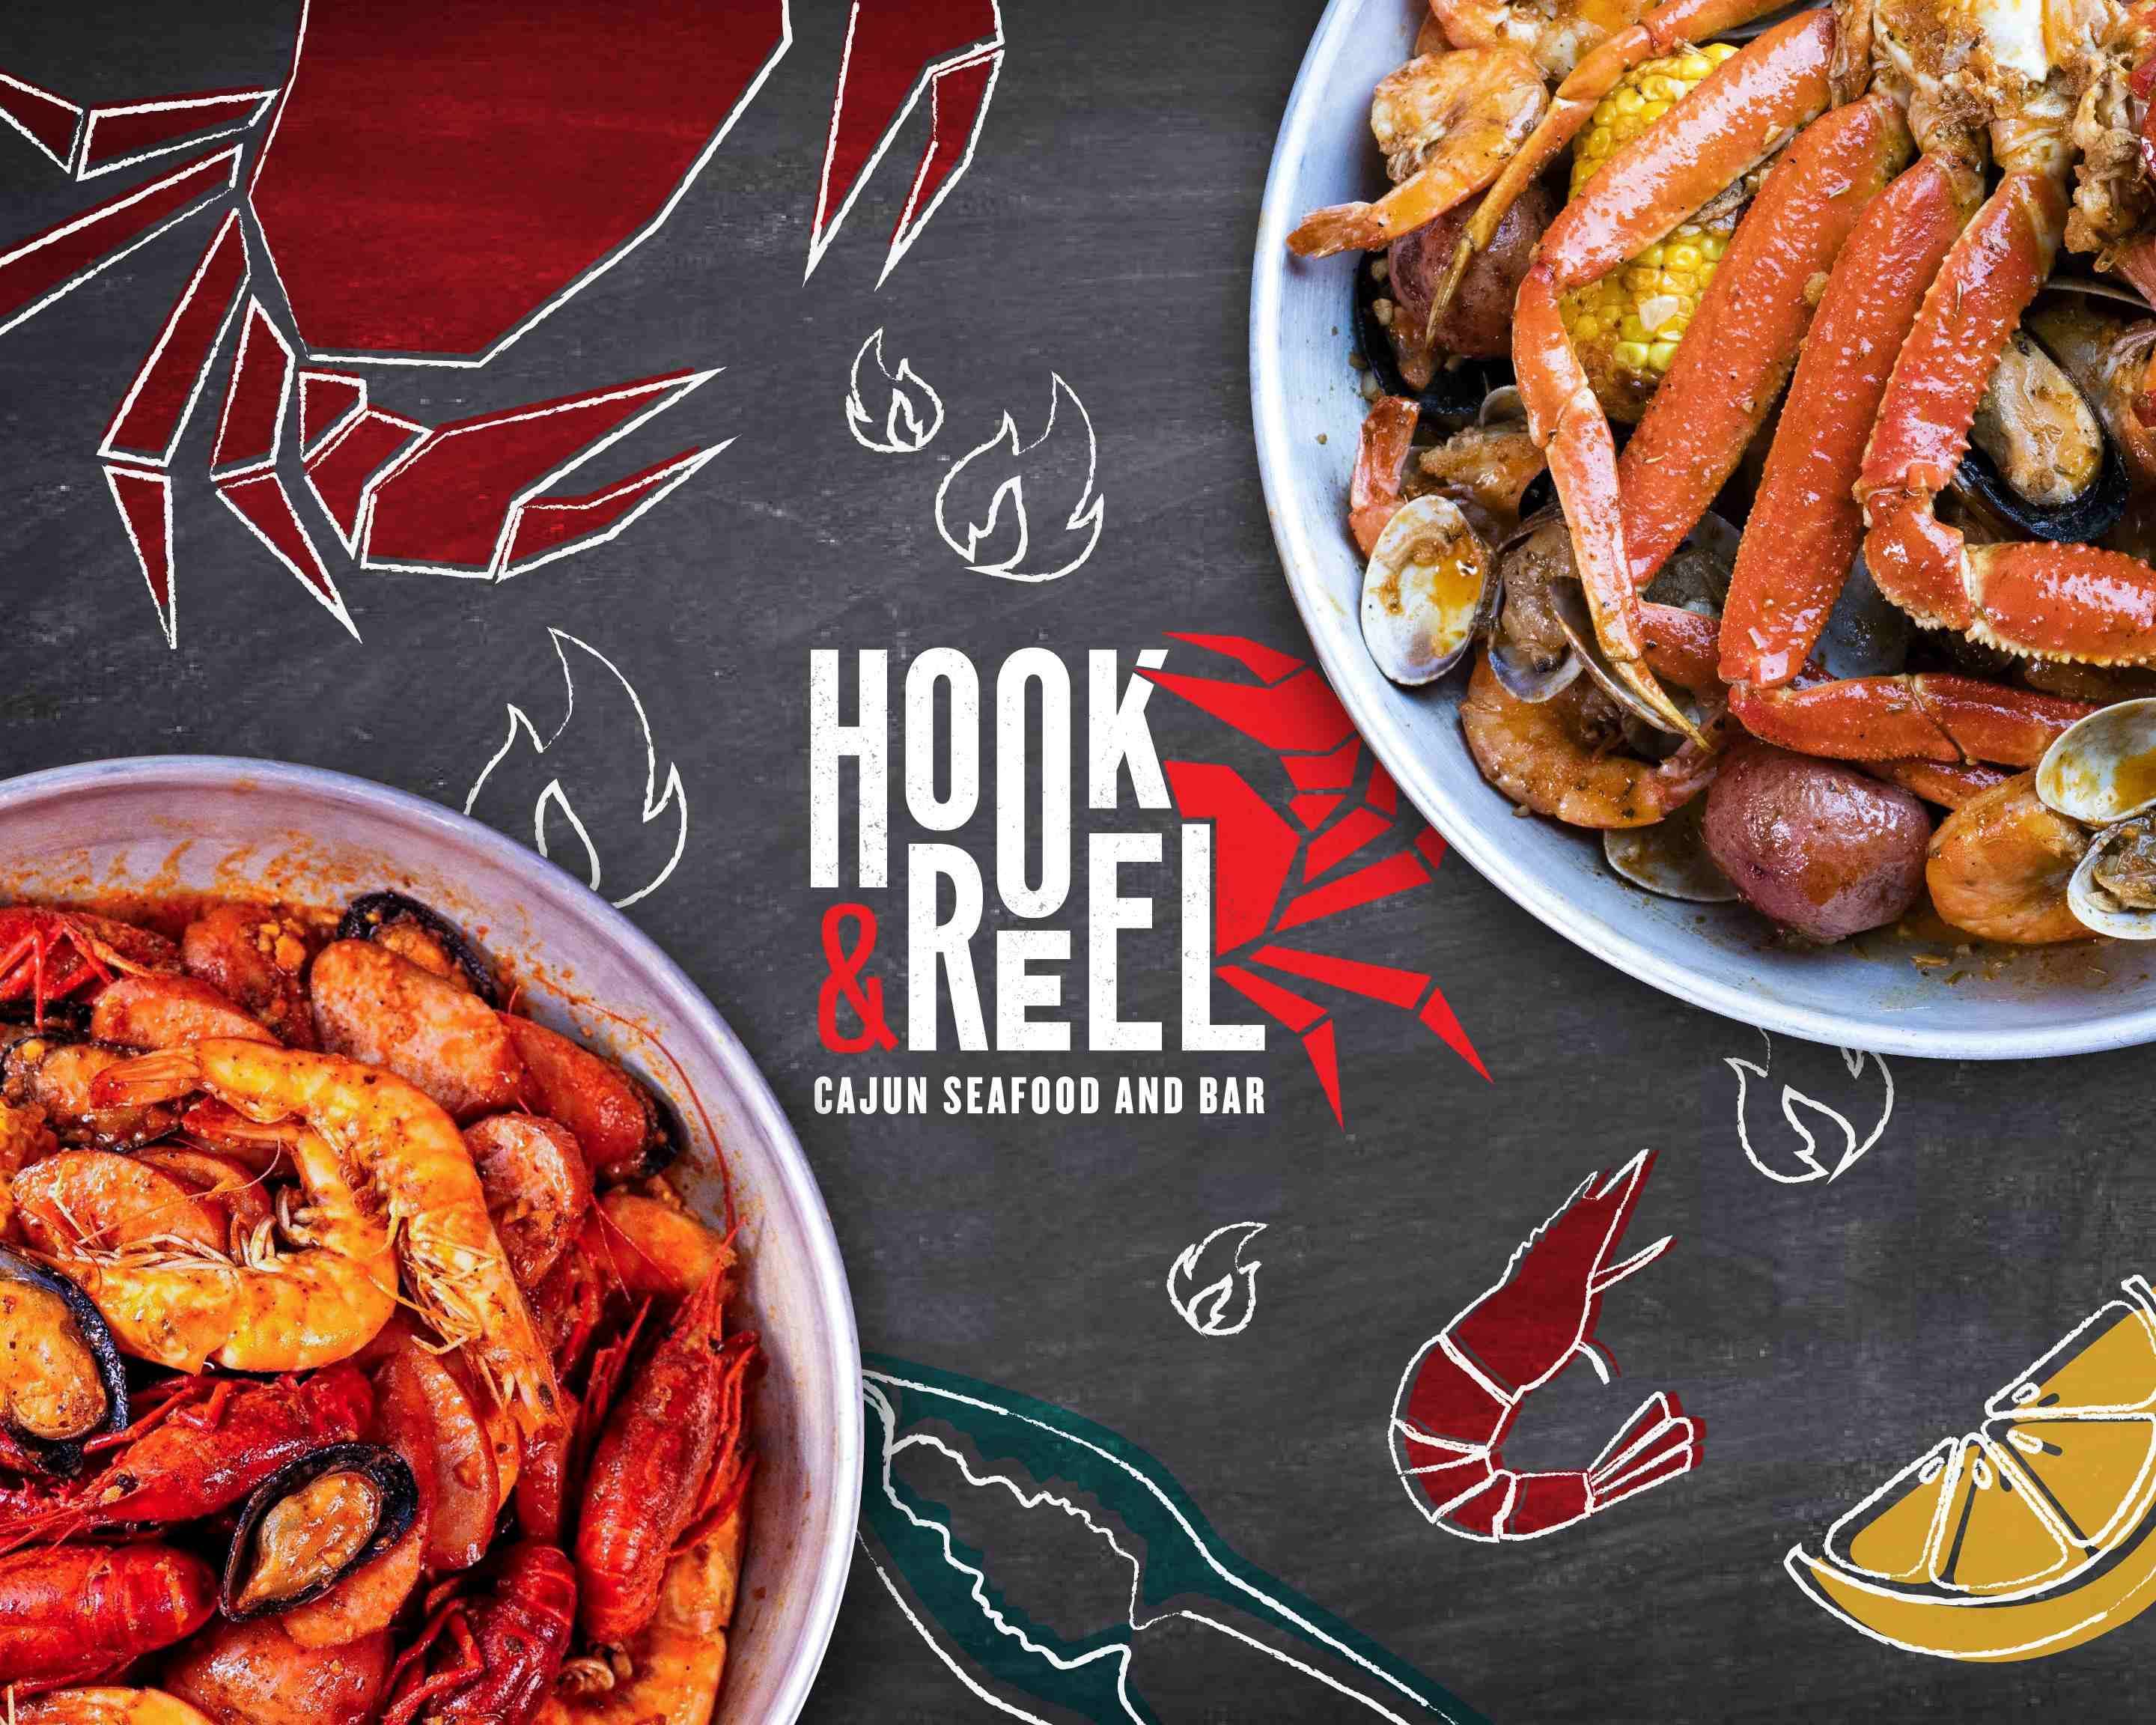 Hook & Reel Cajun Seafood & Bar- Staten Island, NY - No one likes